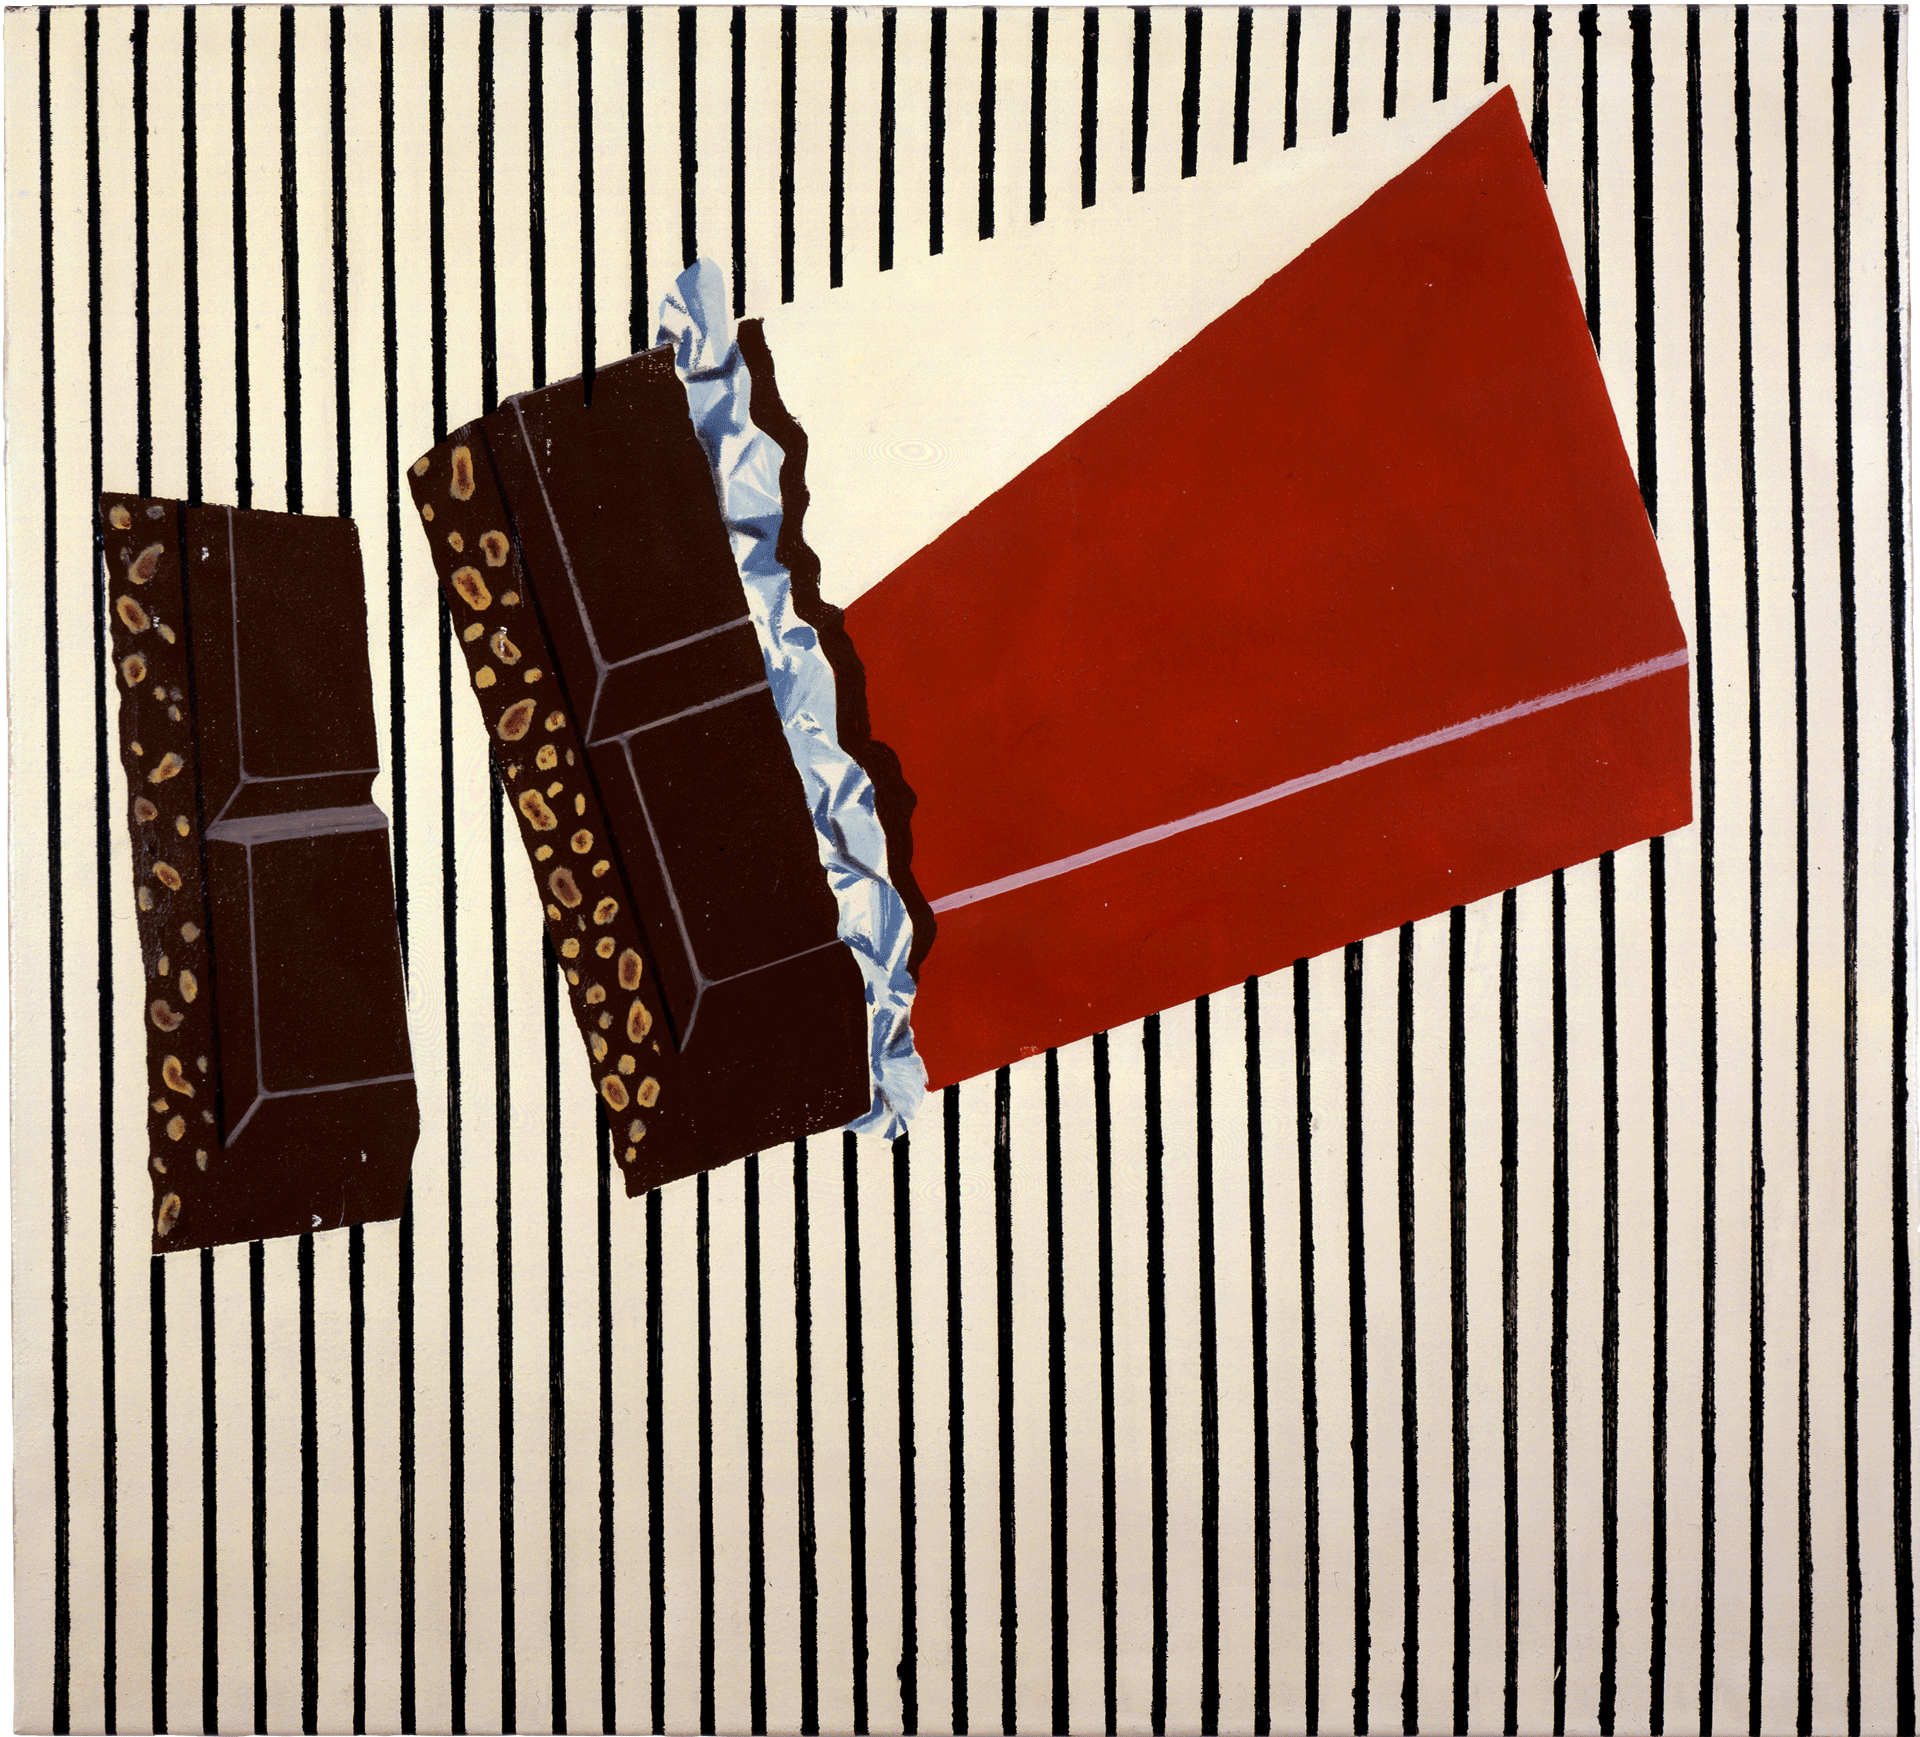 A painting by Sigmar Polke titled Schokoladenbild, translated as Chocolate Painting, dated 1964.